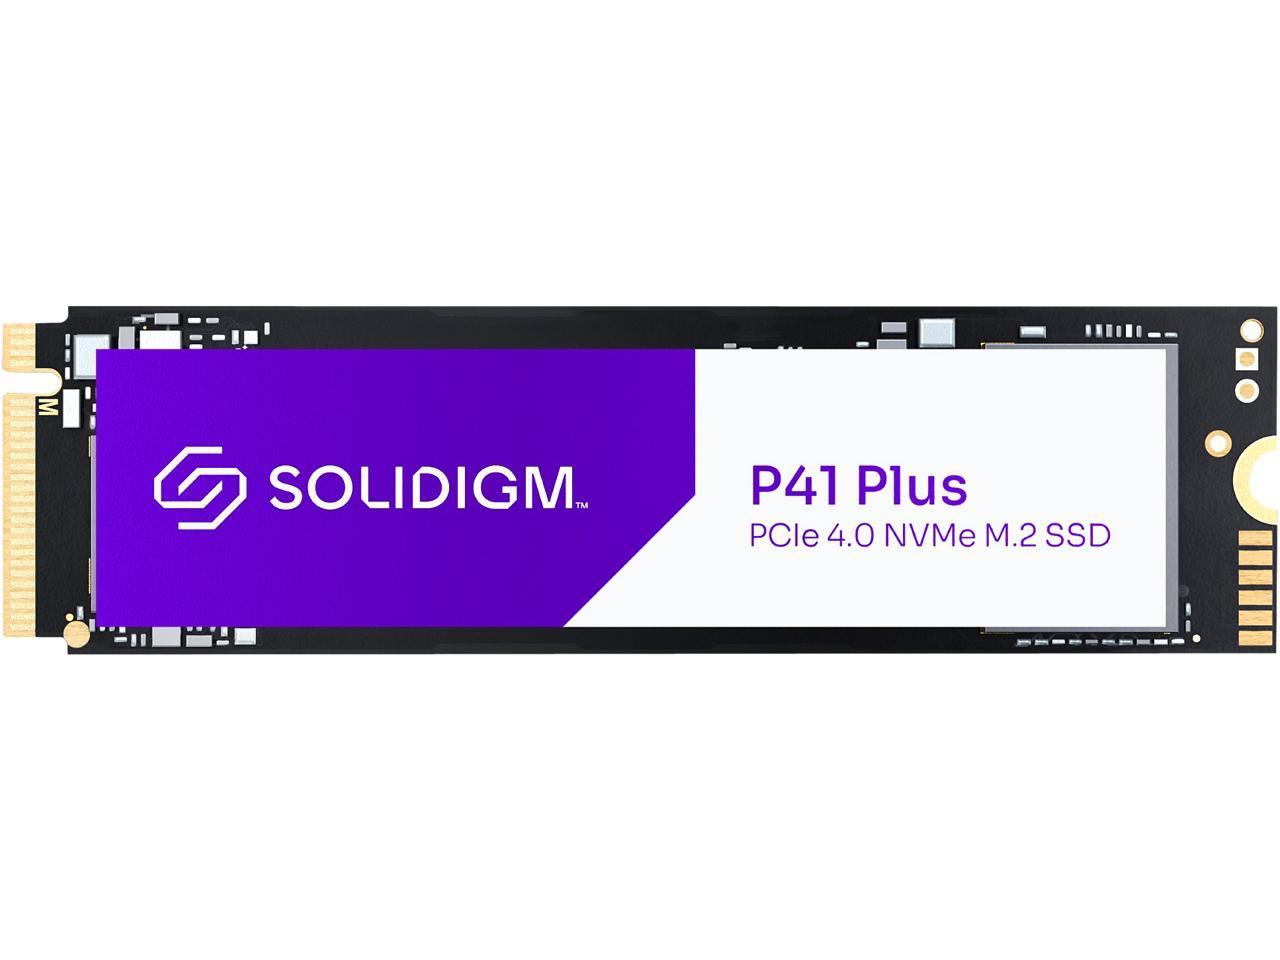 Solidigm P41 Plus 1TB M.2 2280 PCIe 4.0 NVMe Gen4 Internal Solid State